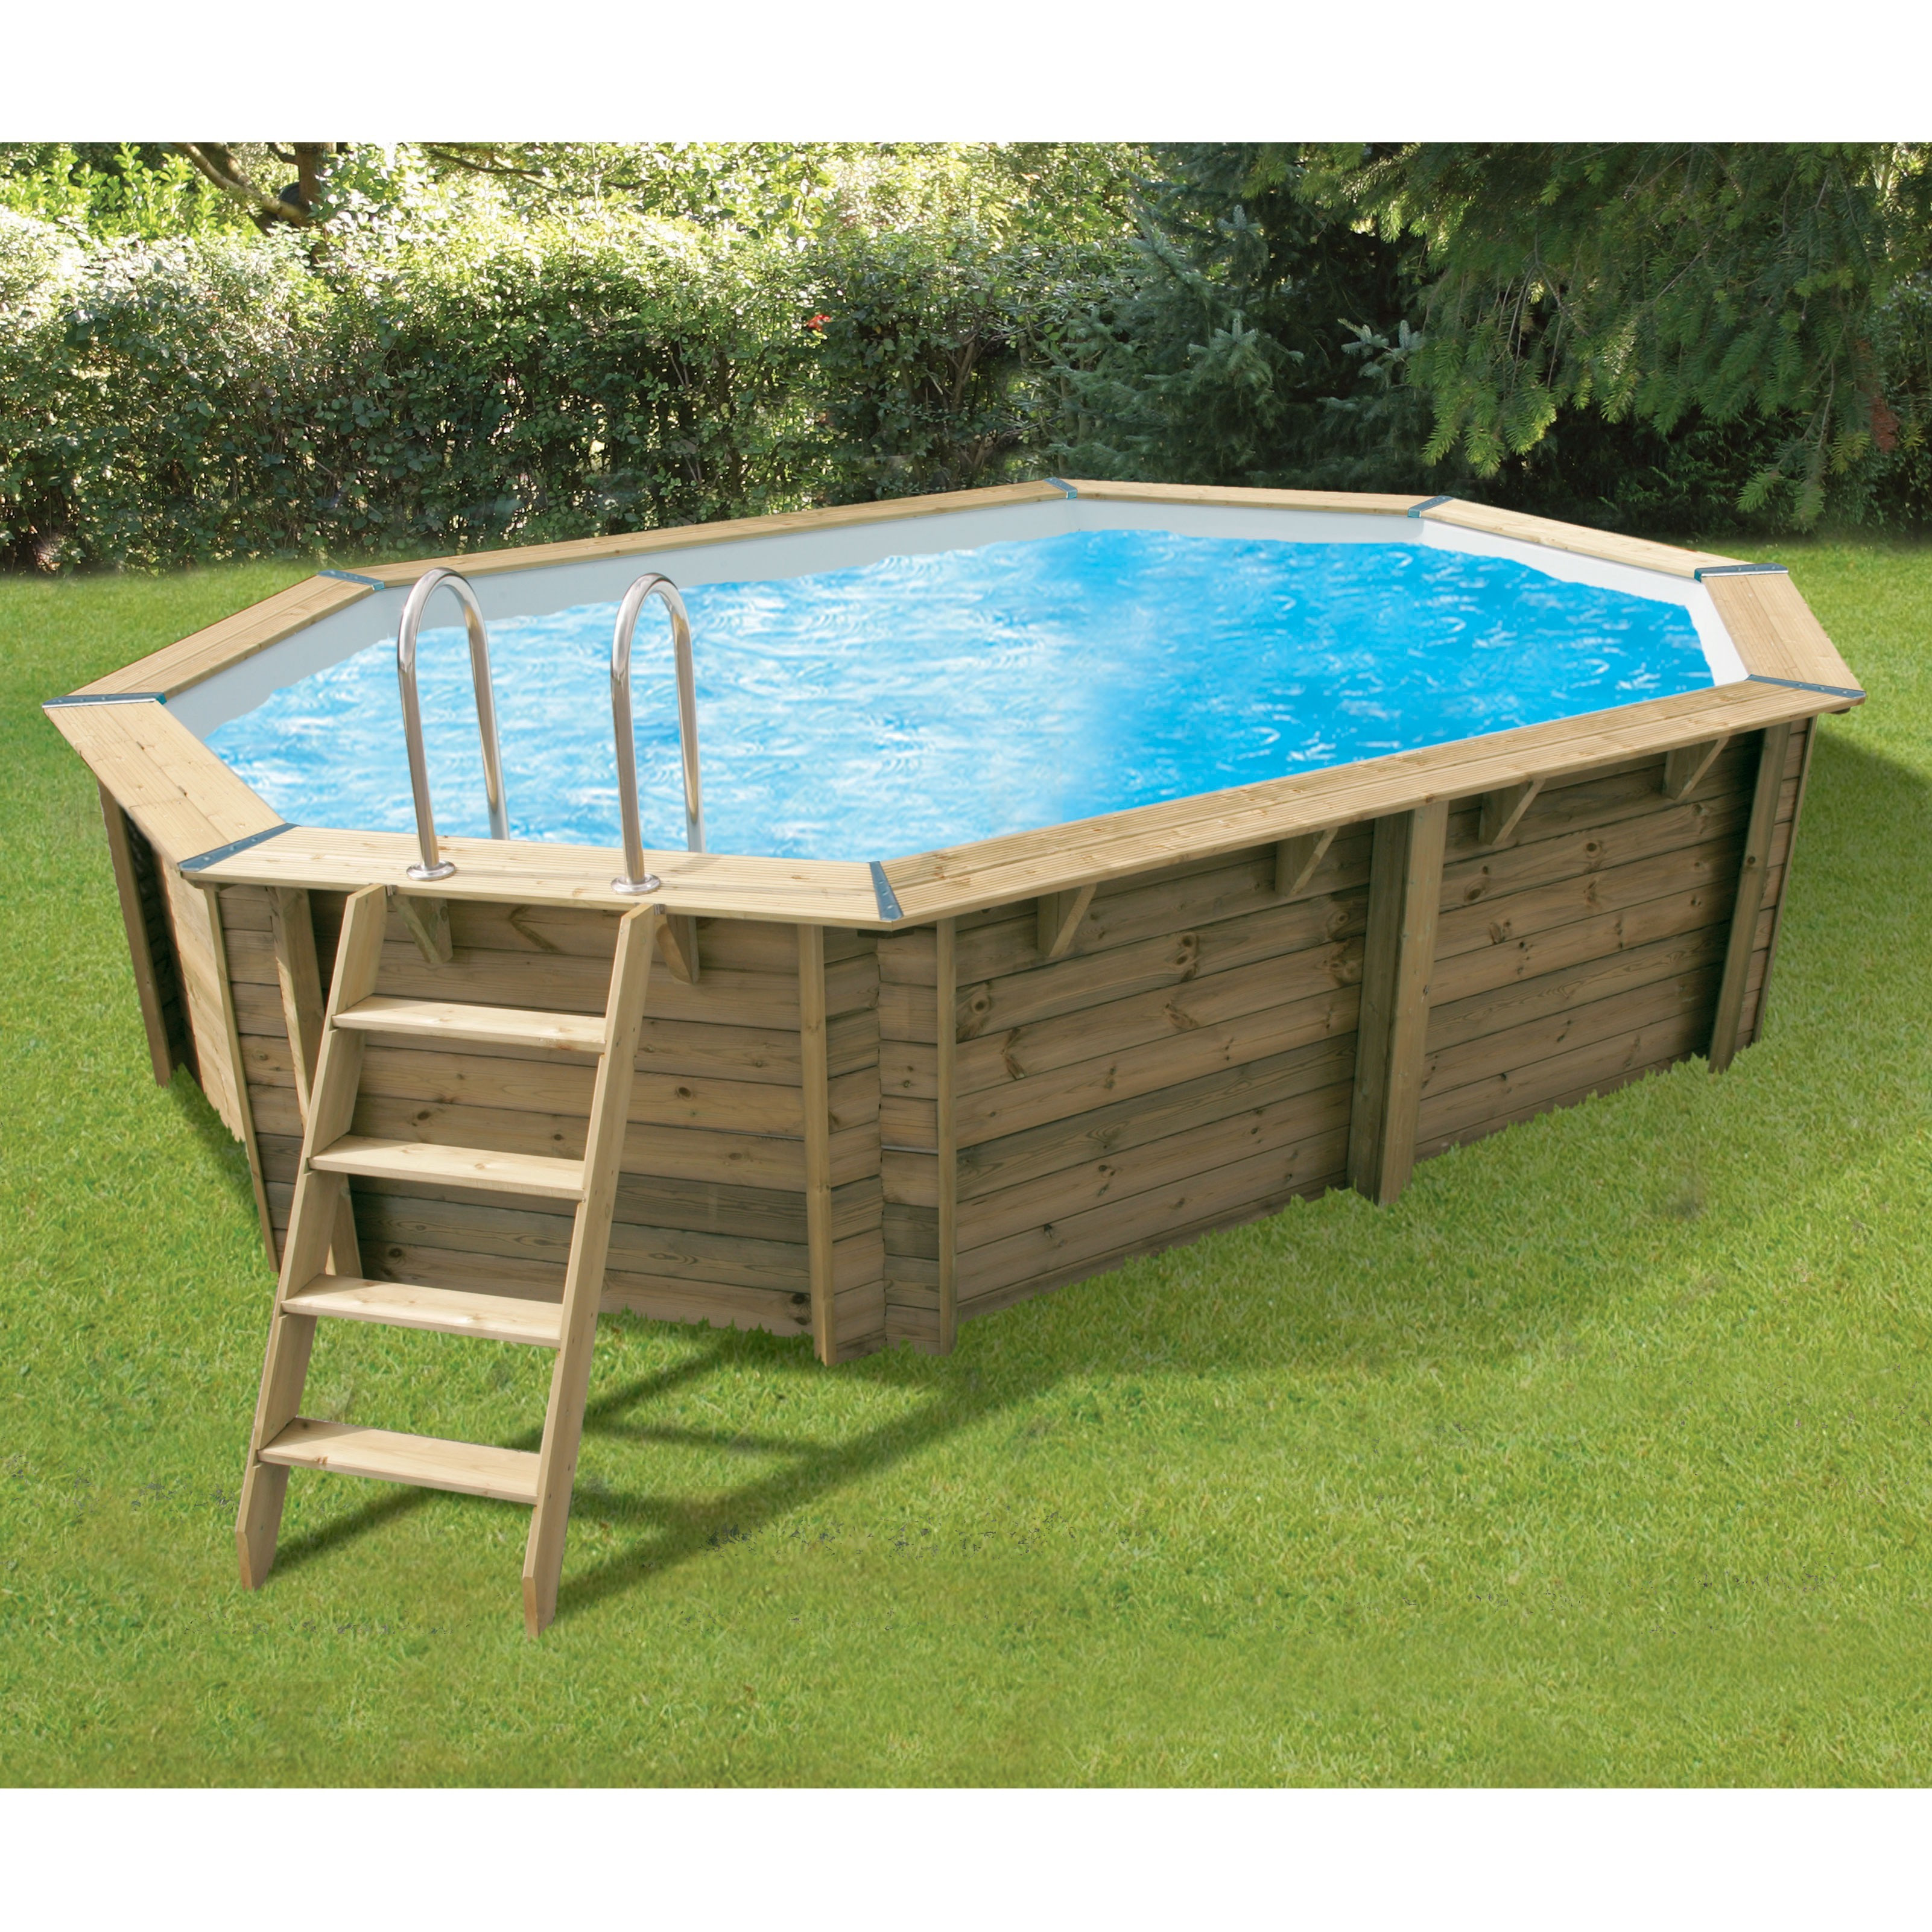 Swimming pool Océa 355x550x120cm - beige liner - Ubbink (delivery: 15 days)